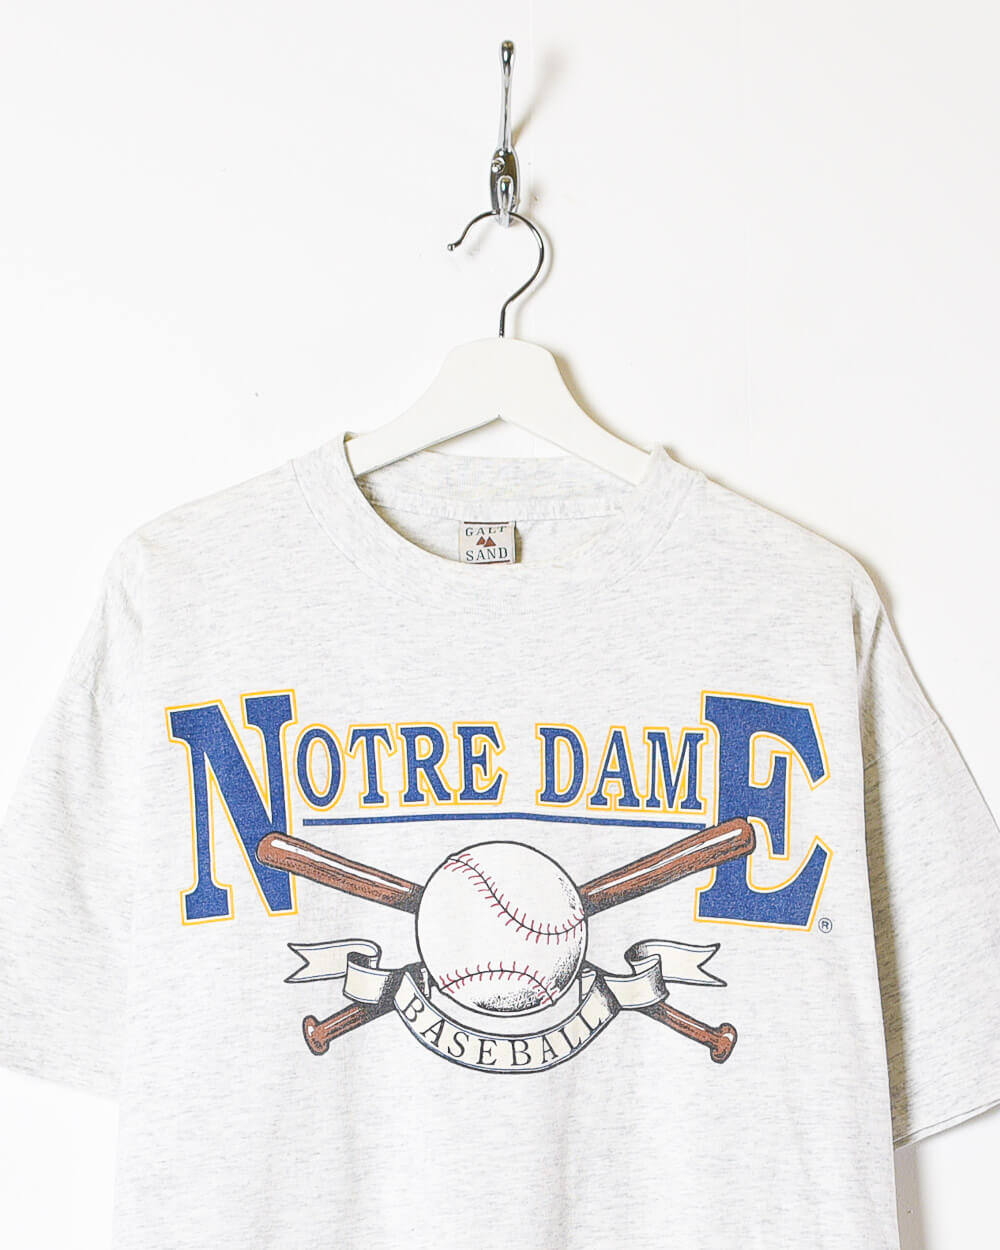 Stone Galt Sand Notre Dame Baseball T-Shirt - X-Large